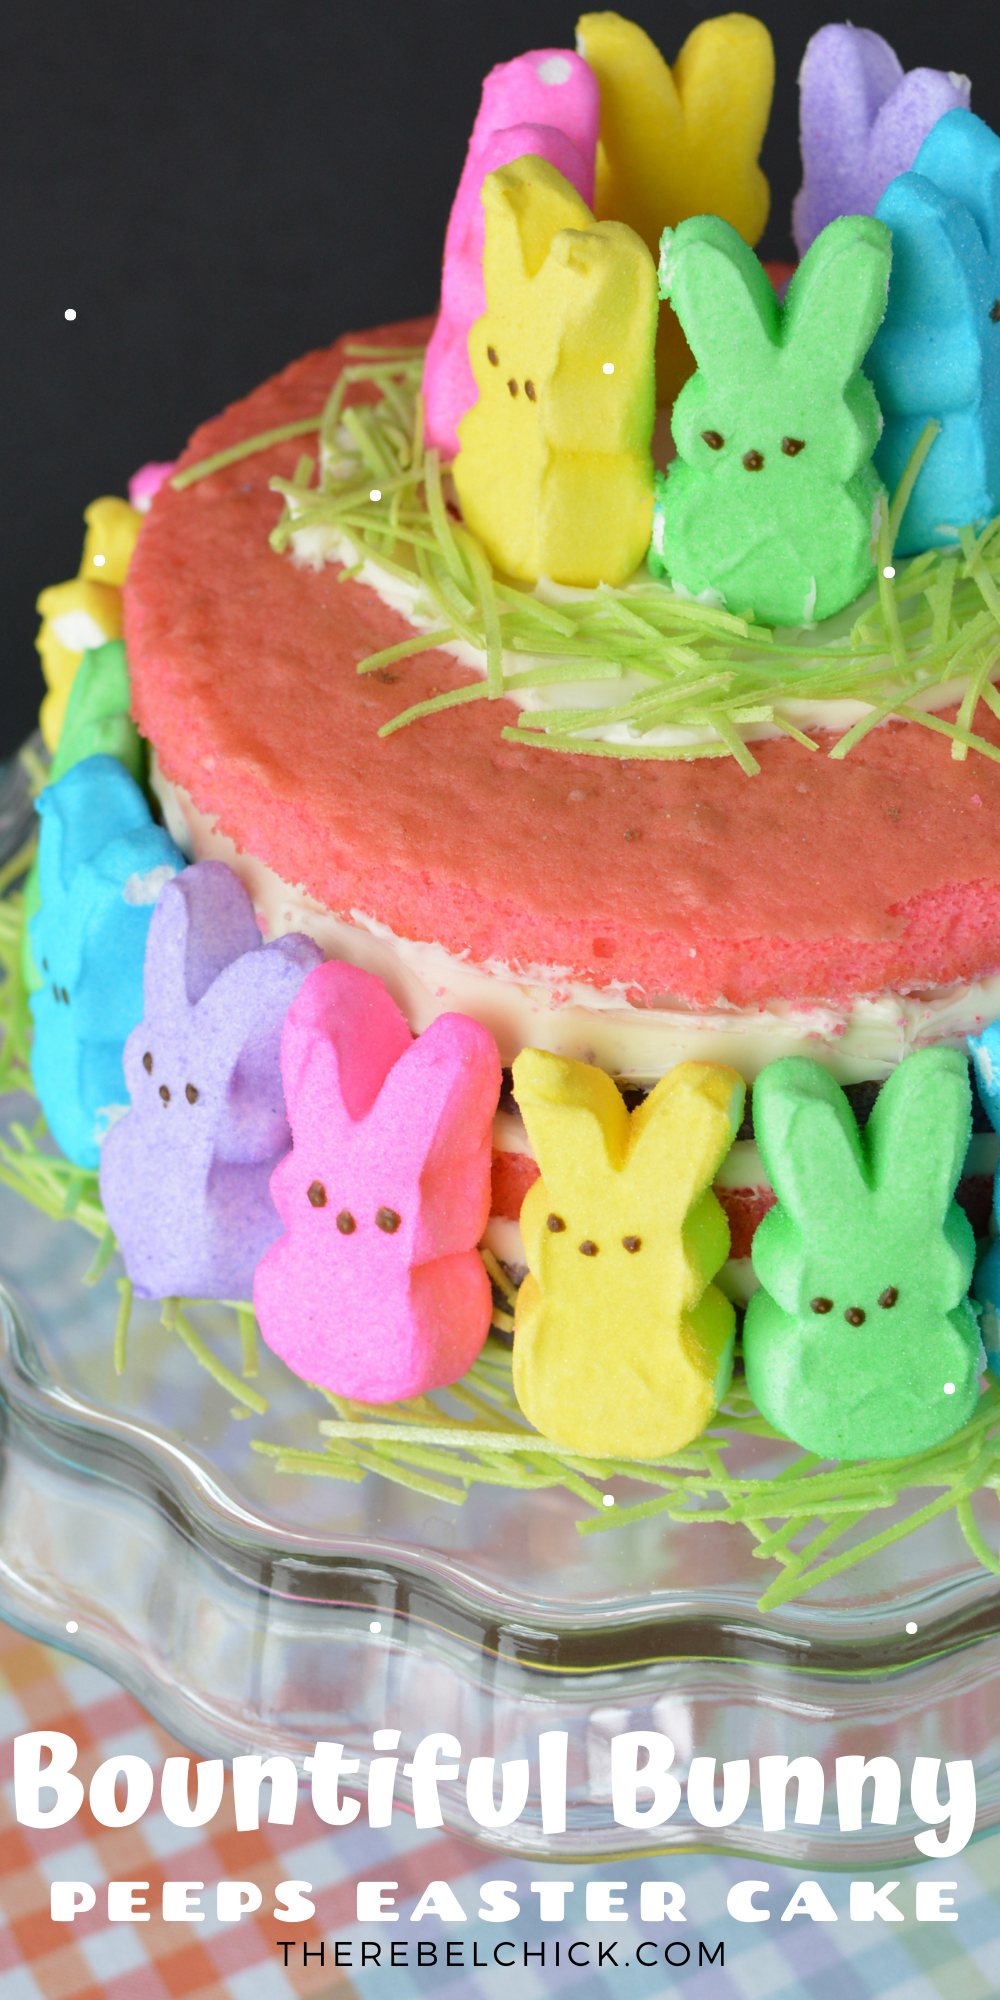 Bountiful Bunny PEEPS Easter Cake Recipe